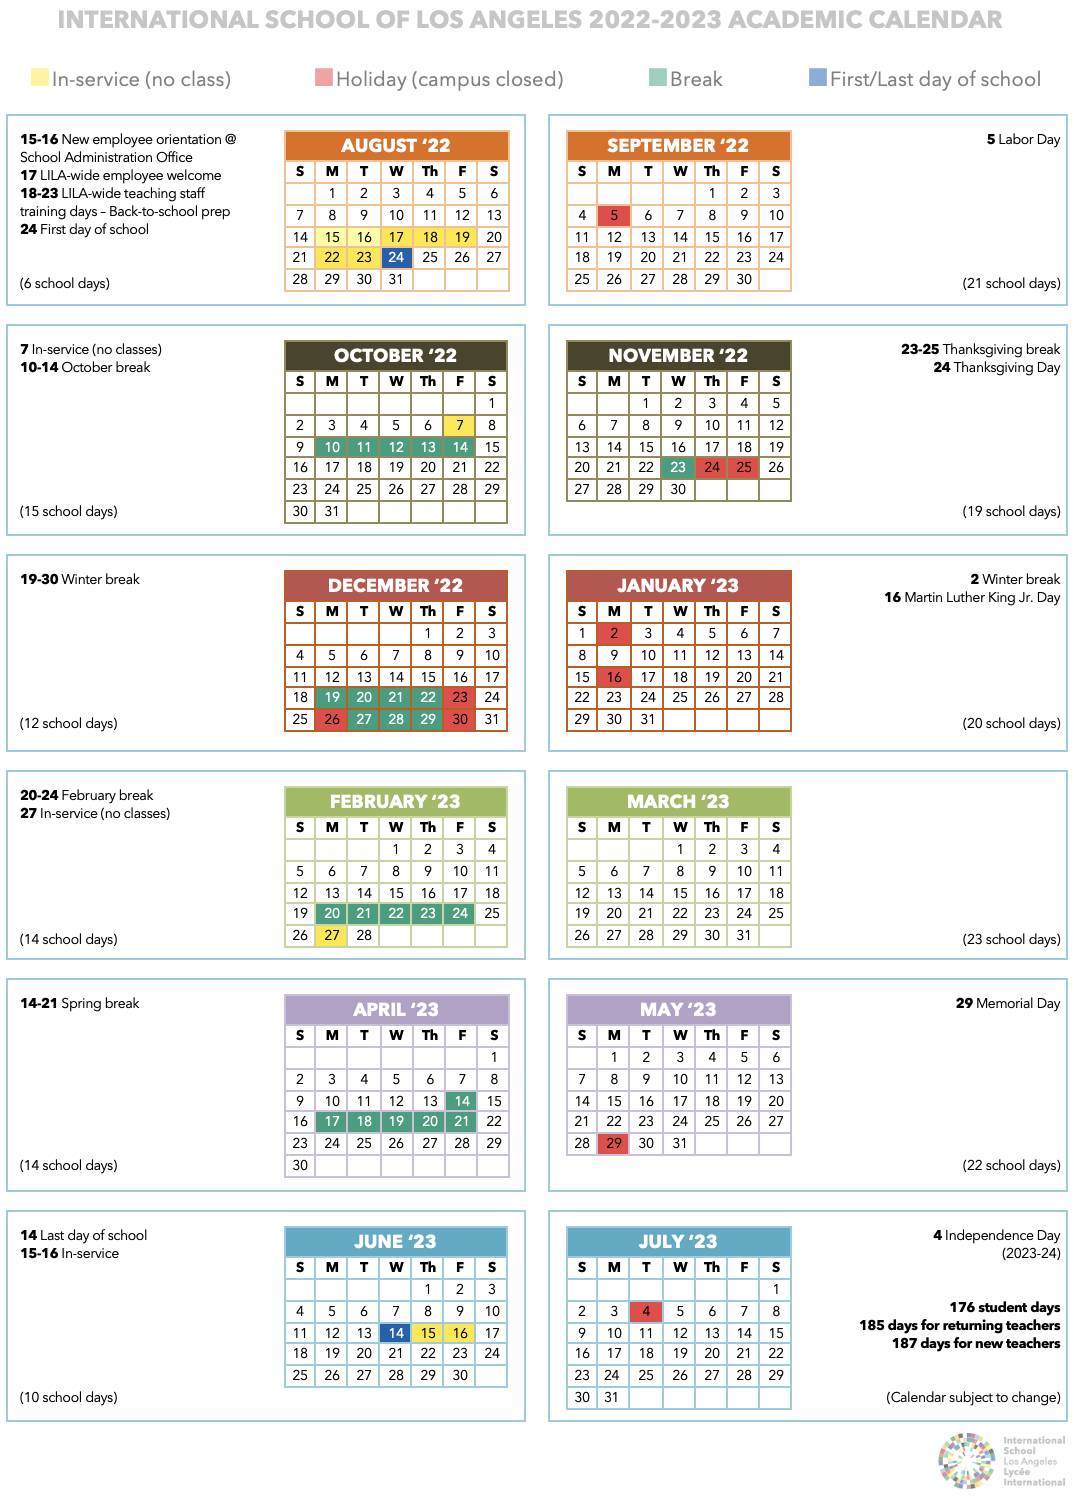 Csun Academic Calendar 2022 2023 Calendar | International School Of Los Angeles